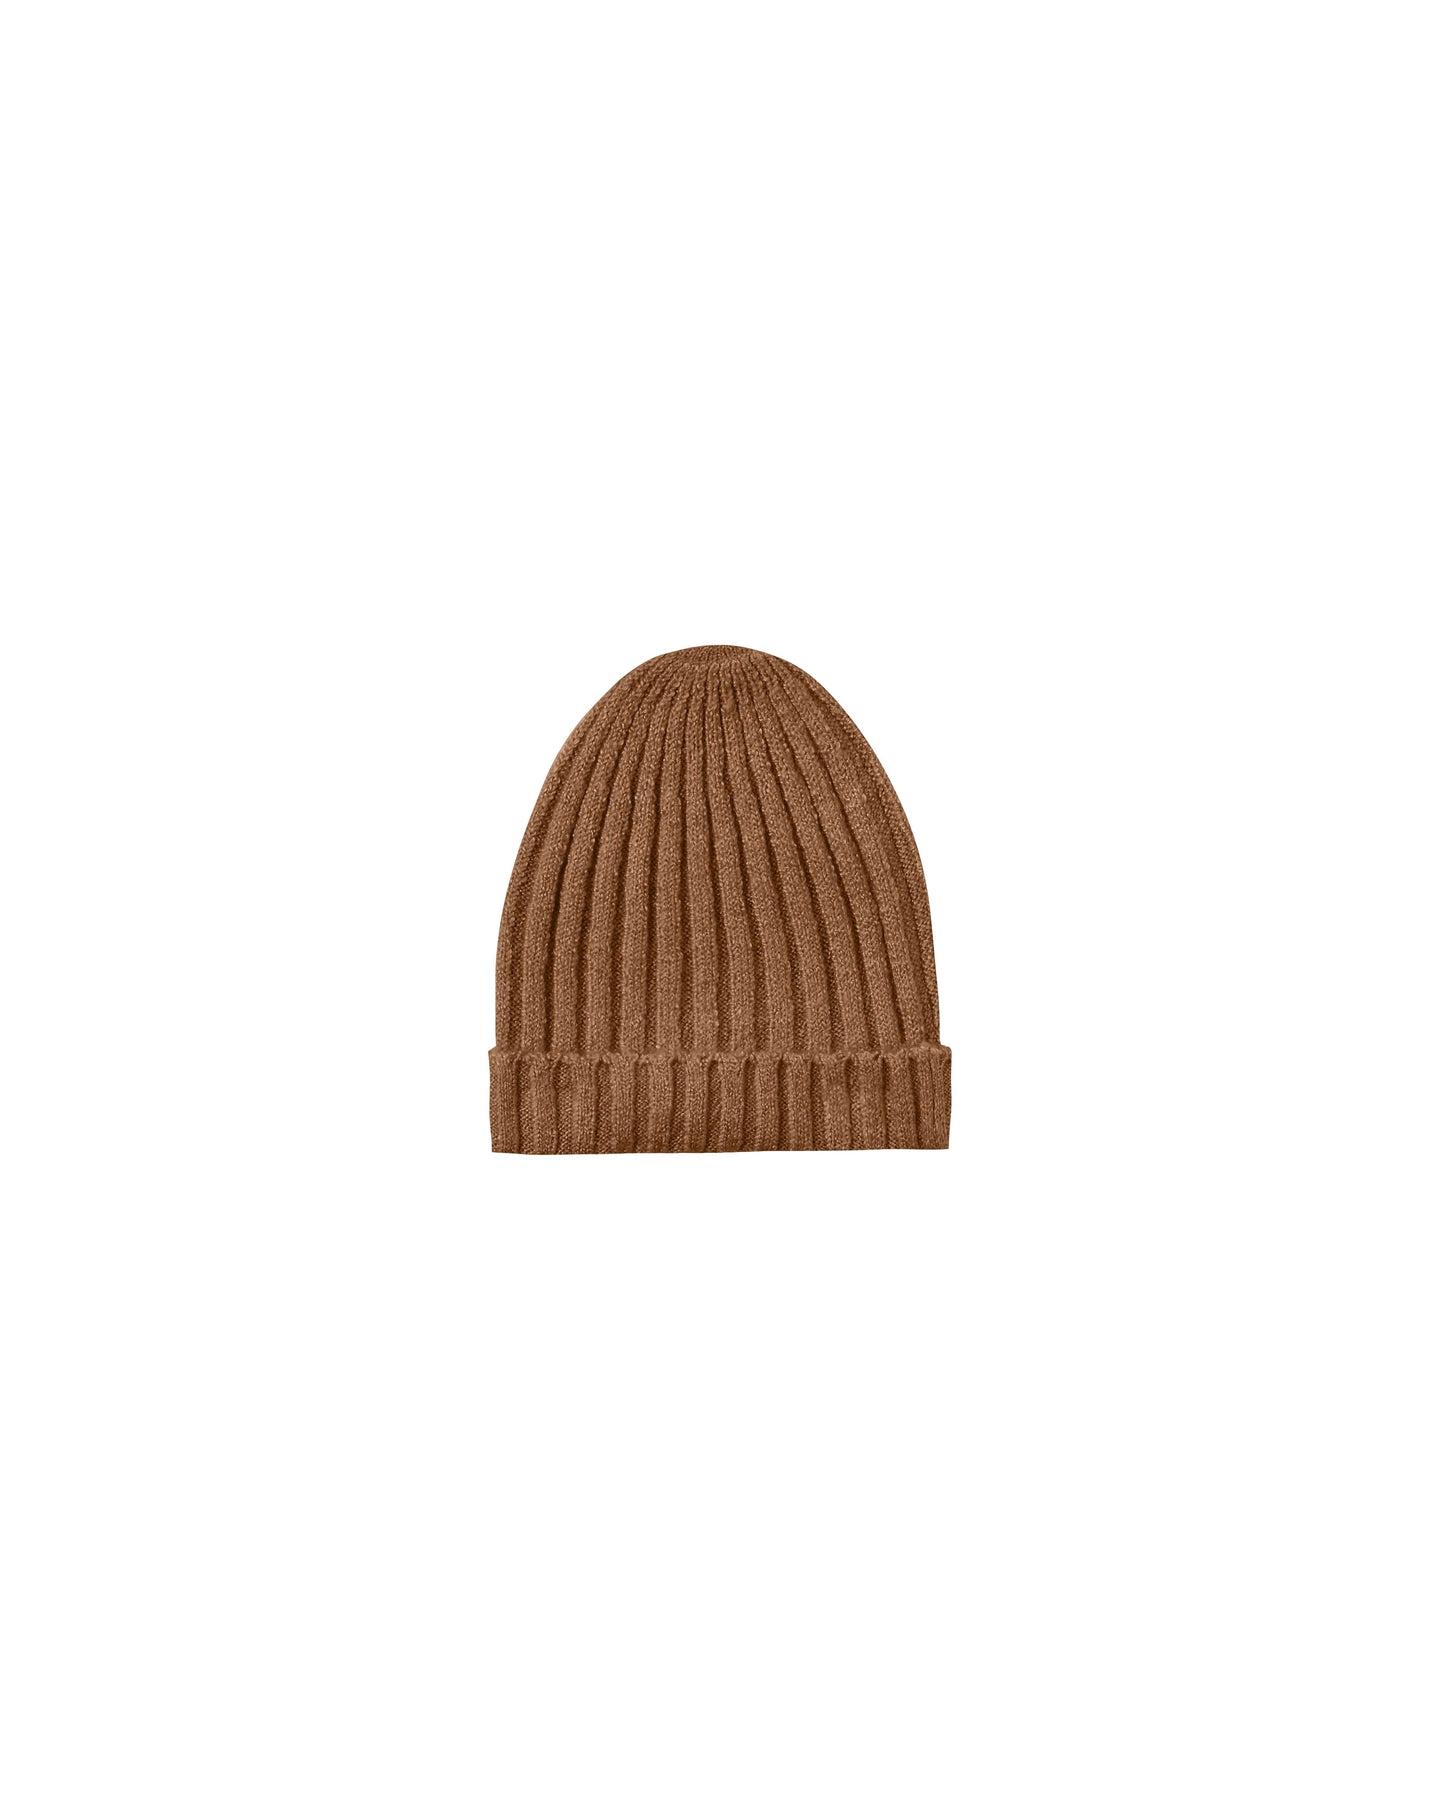 Rylee + Cru - Beanie Honeycomb Sweater Knit - Cinnamon